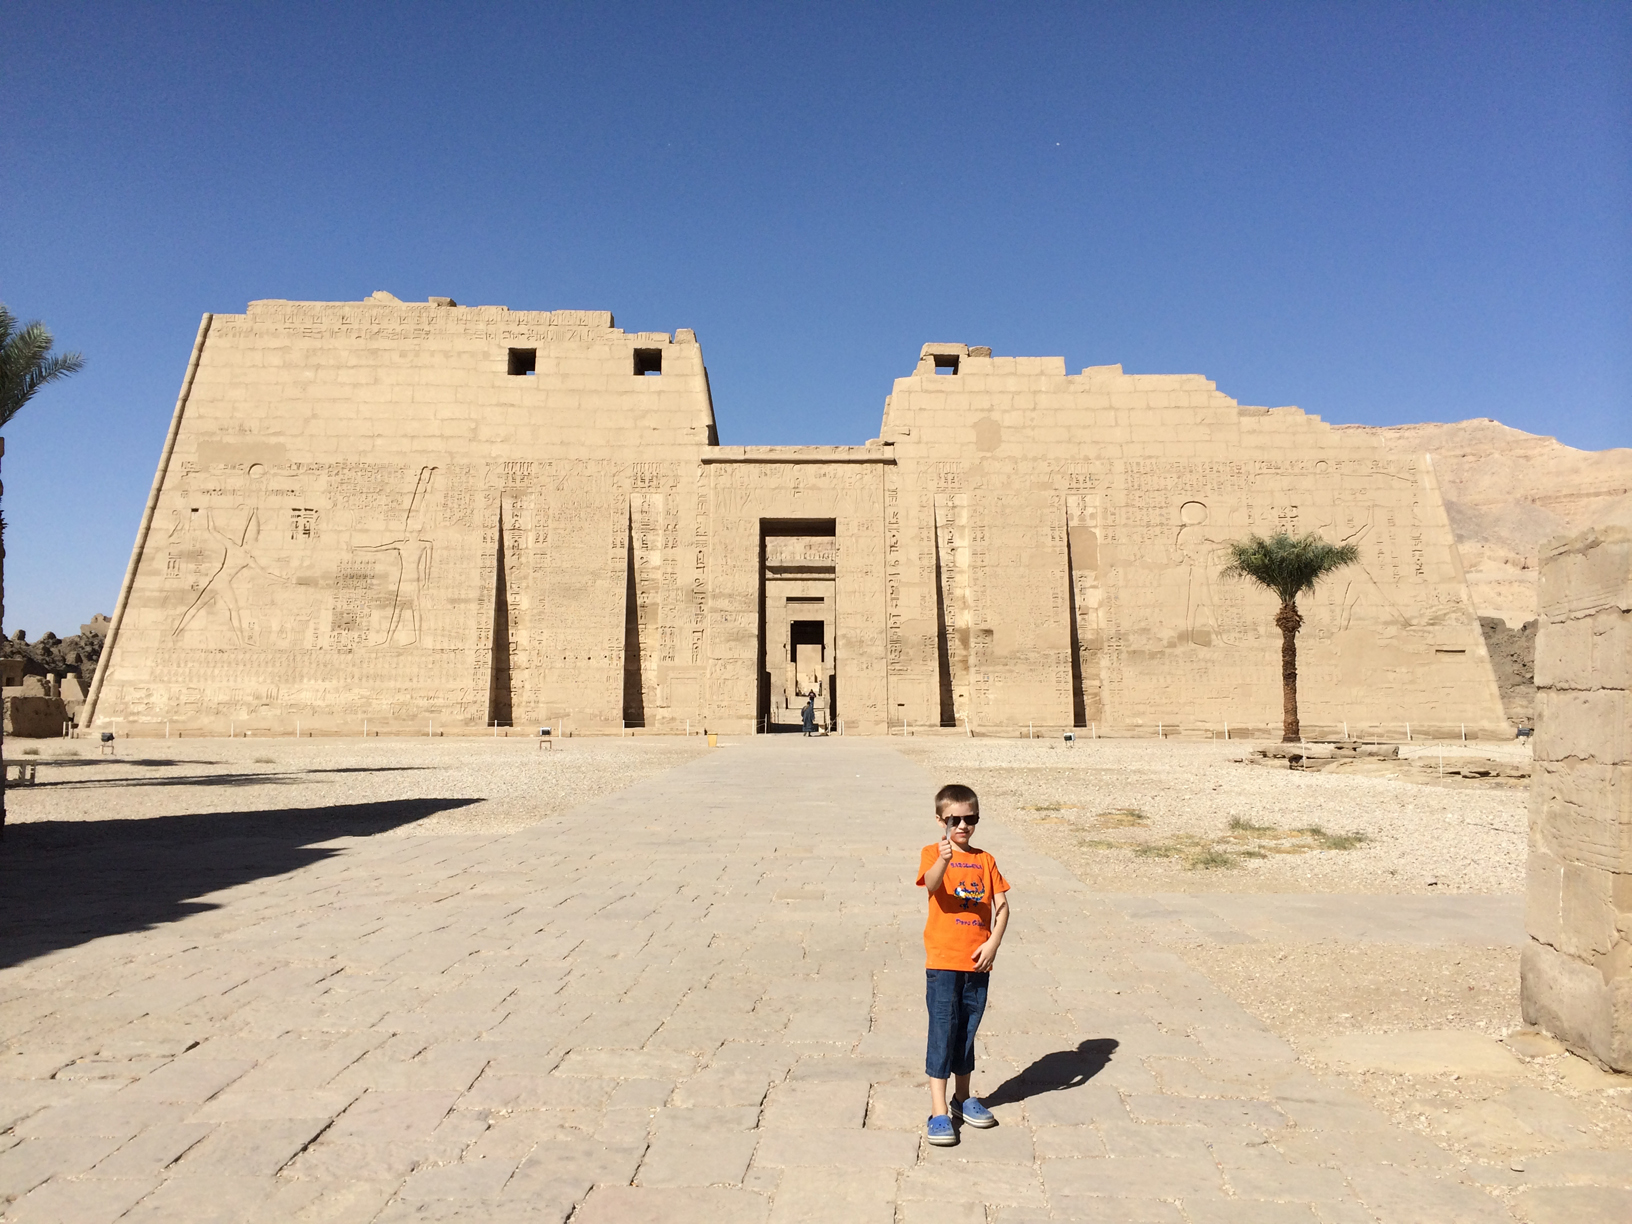 
Temple of Medinat Haby, Luxor